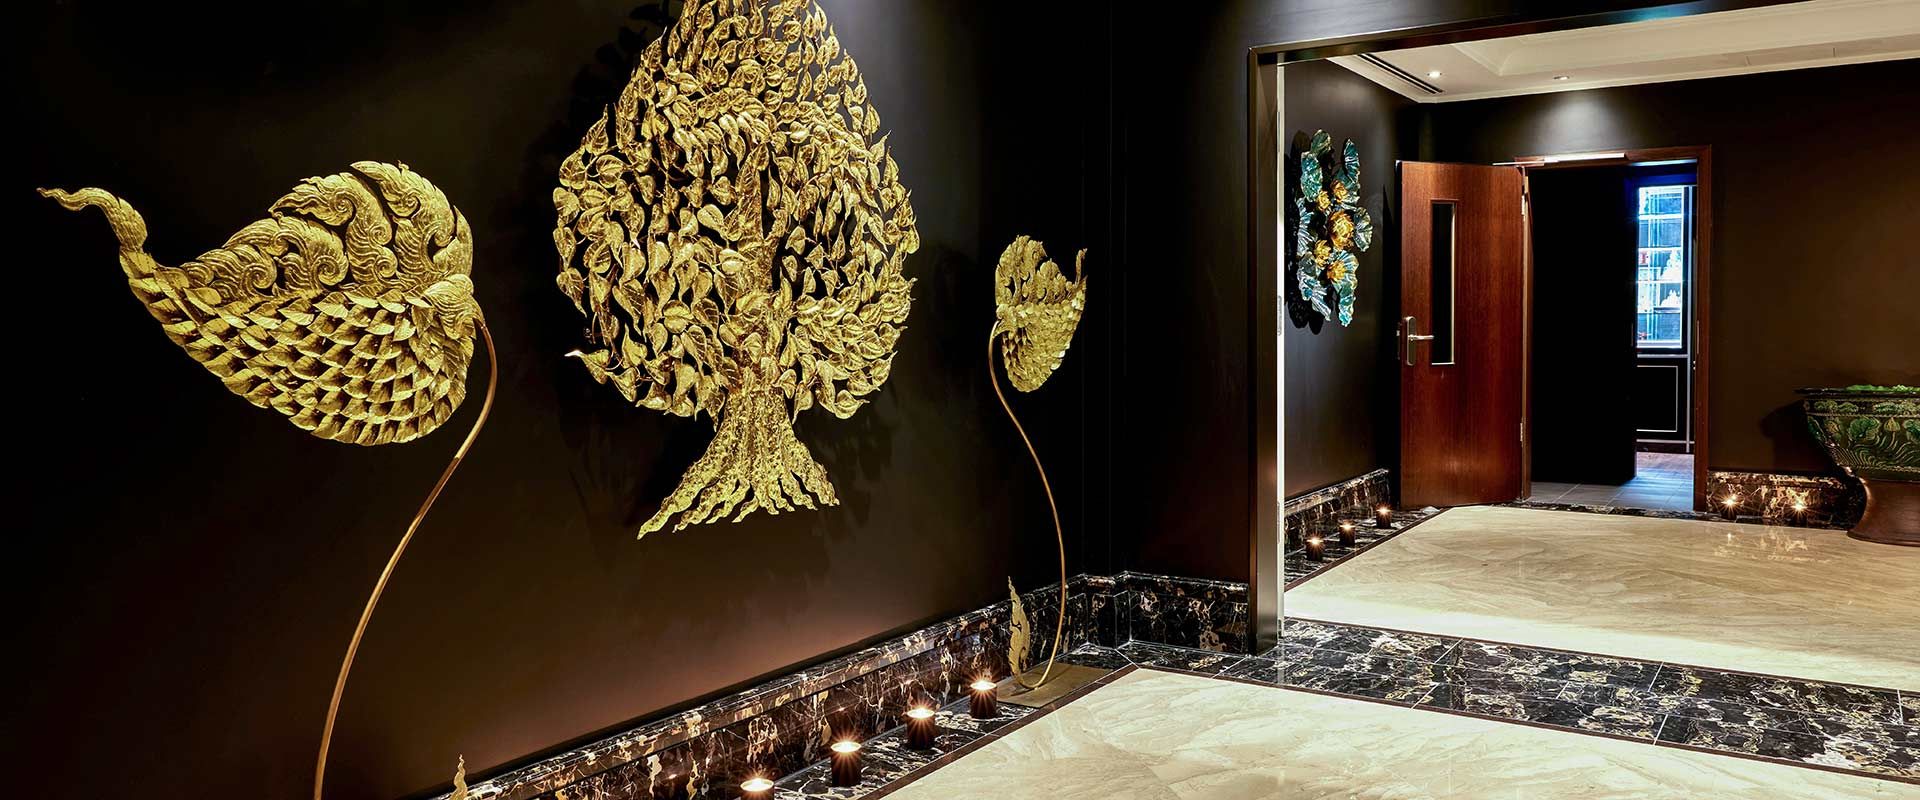 Wonderful wallpapers for WOW living room designs – Best Prices on Sleek  Modular Kitchens & Wardrobes | Bespoke Decor Kochi & Thrissur